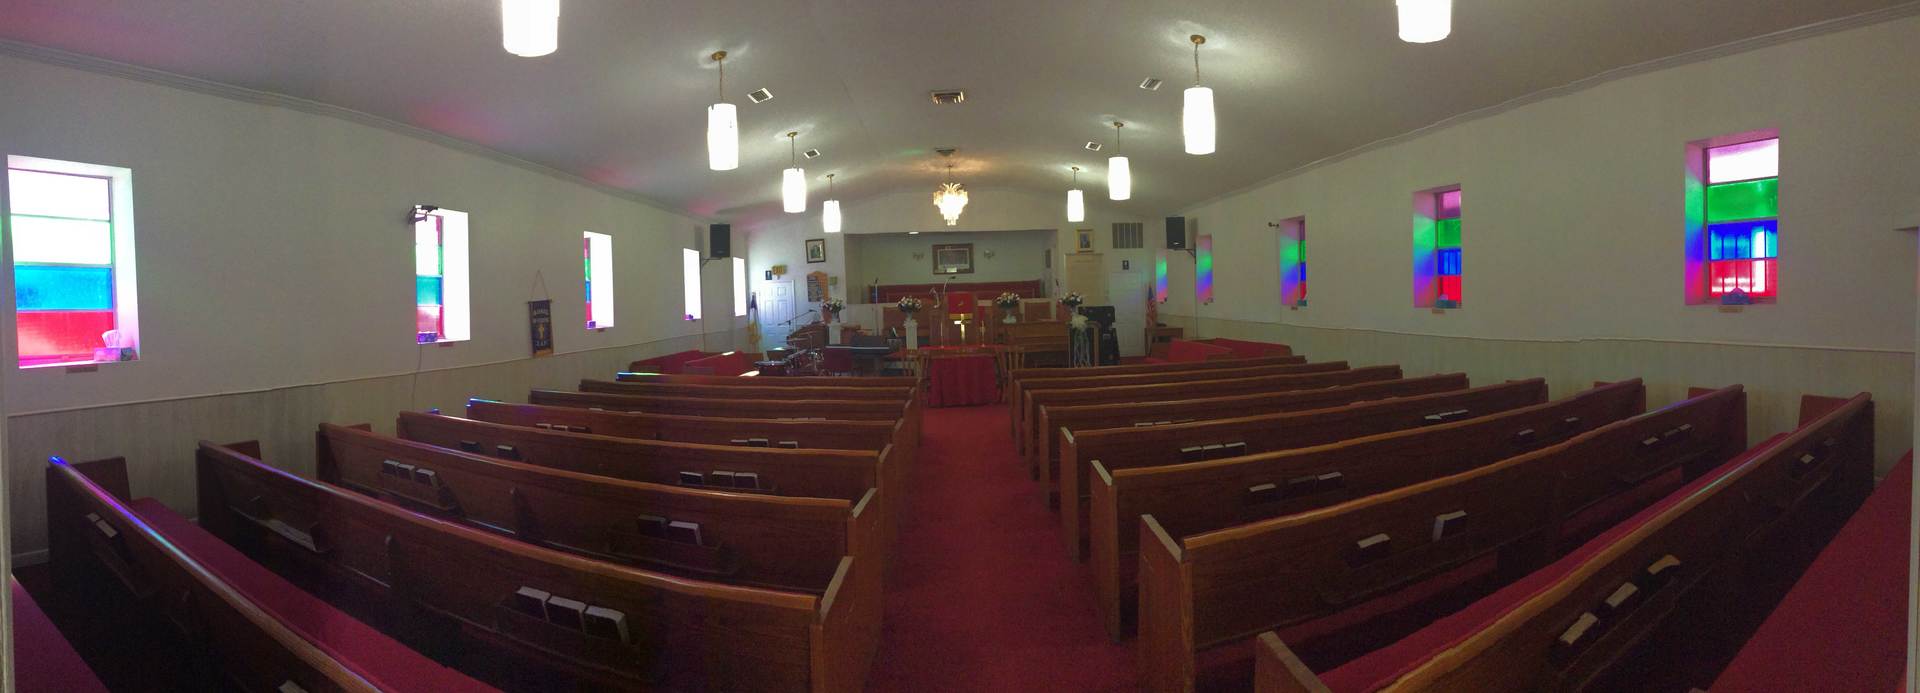 Banner_church_image-NEW